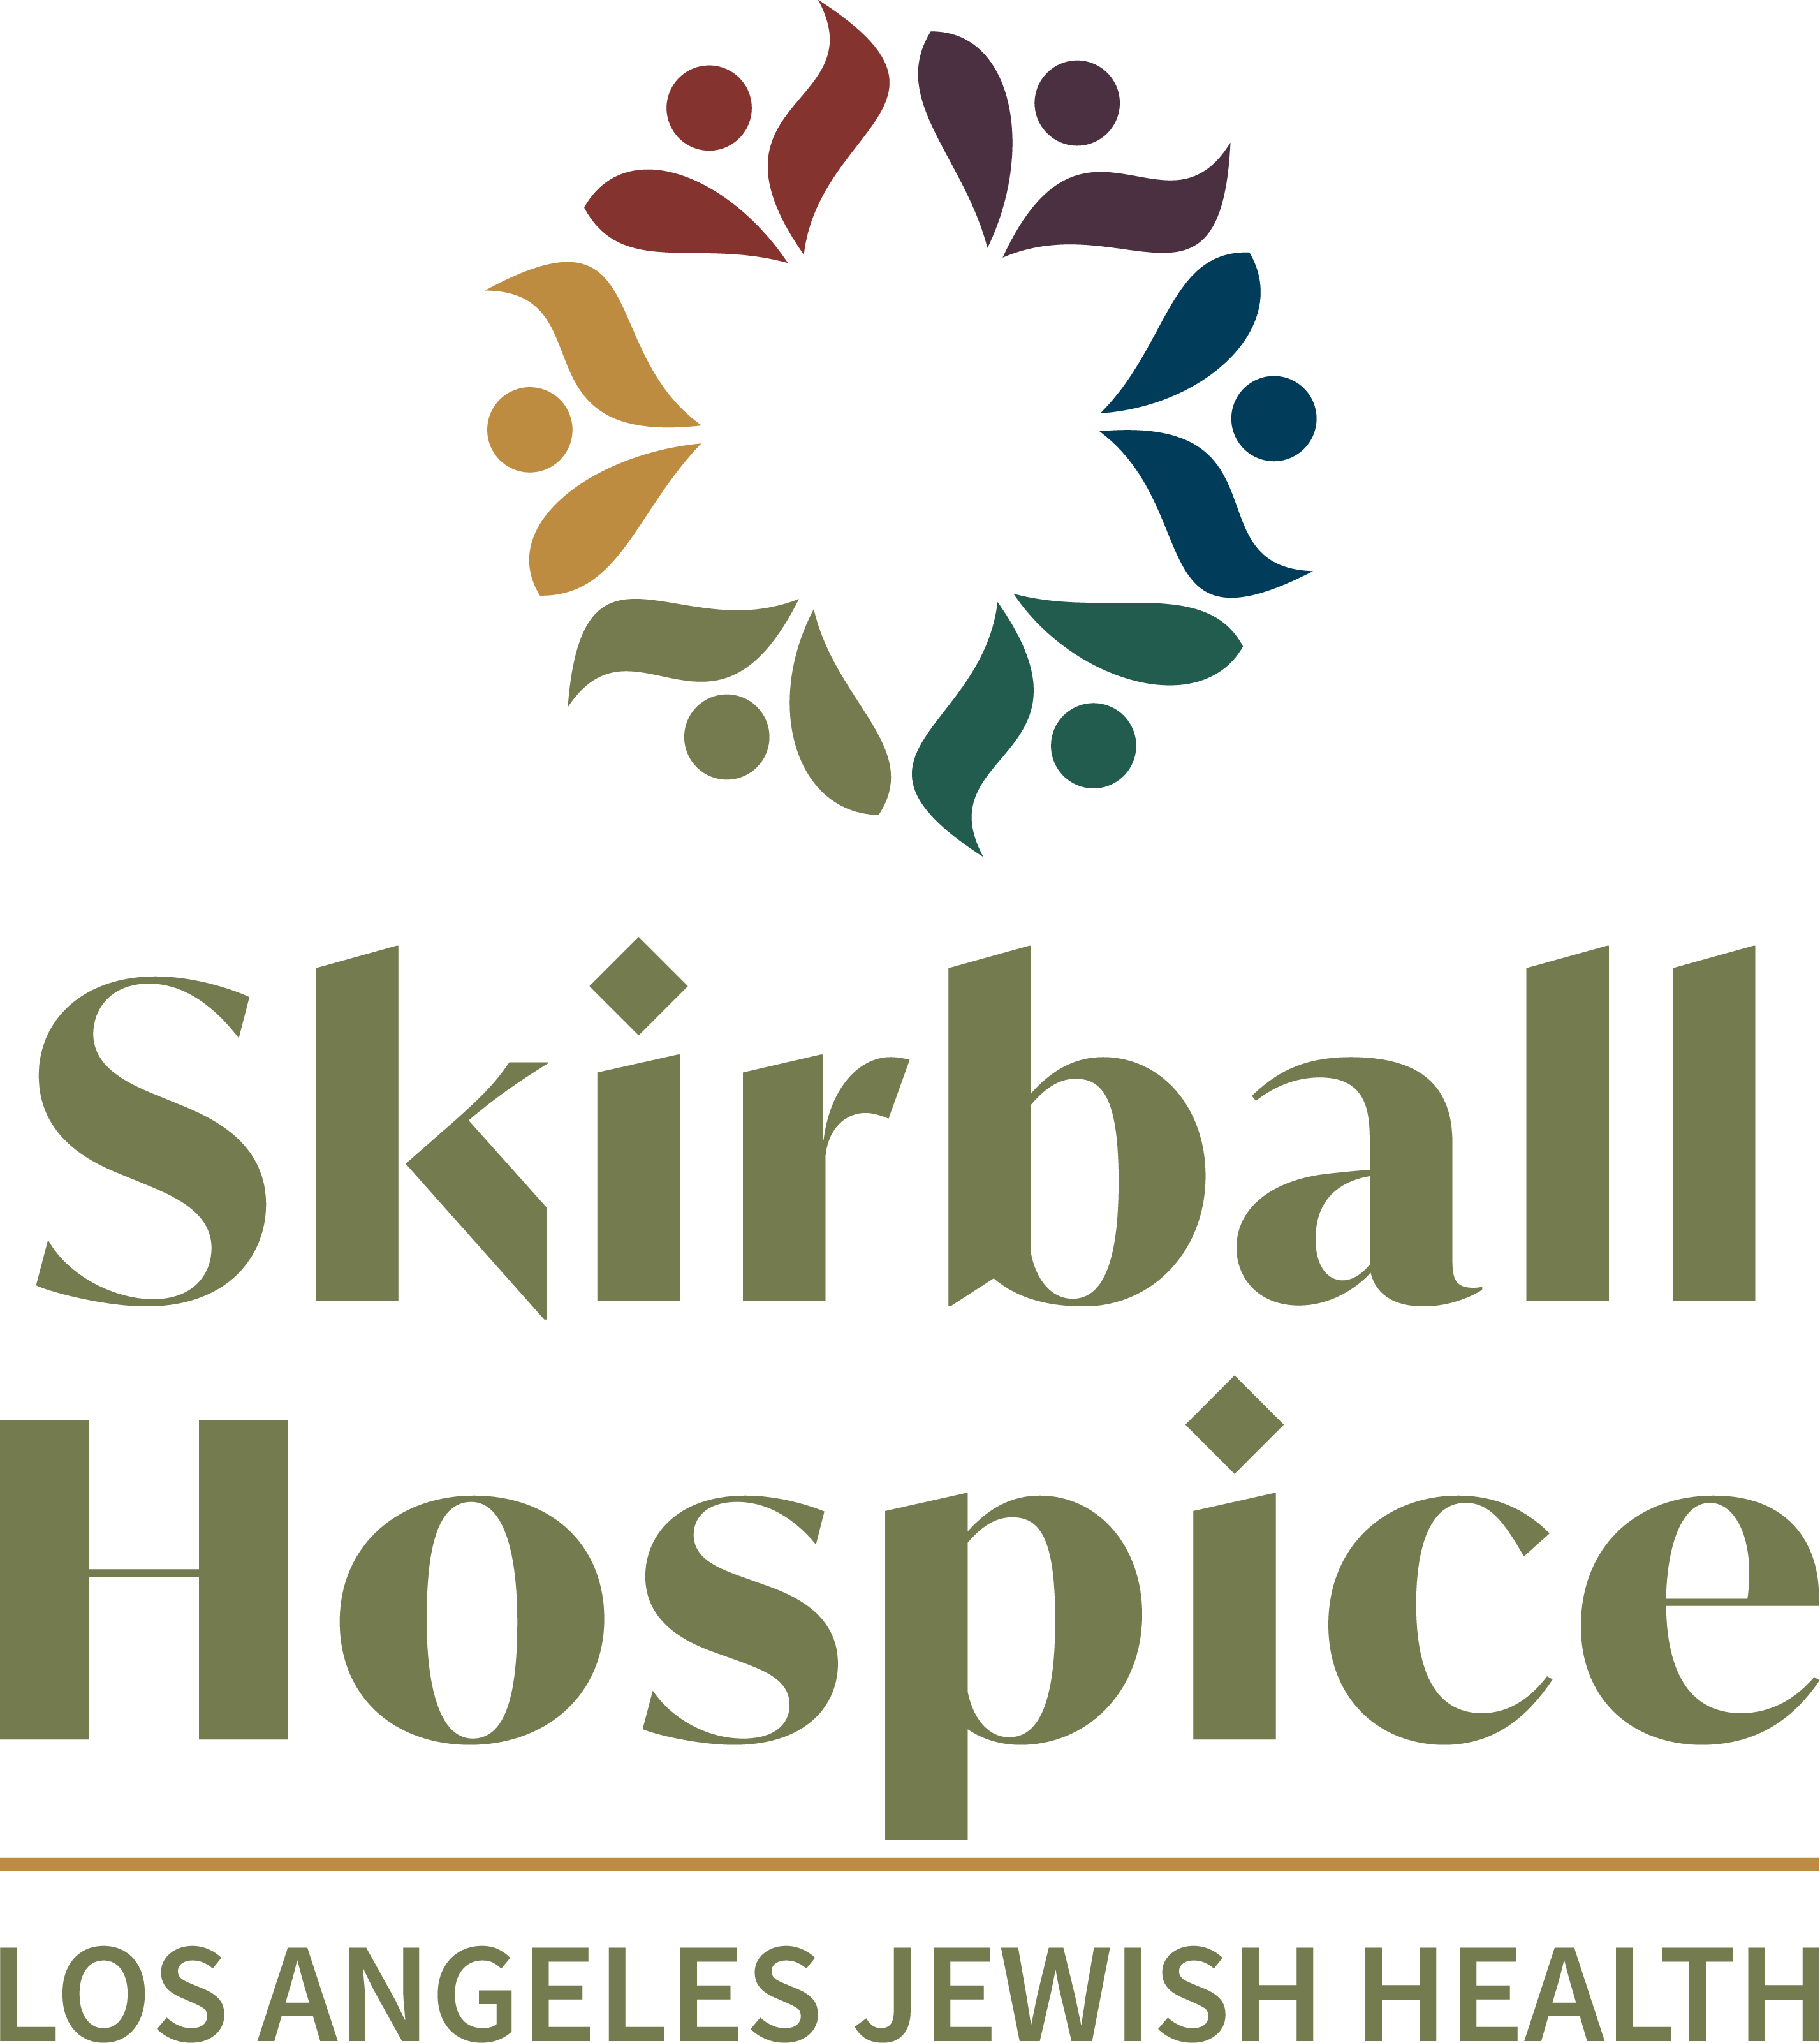 Skirball Hospice